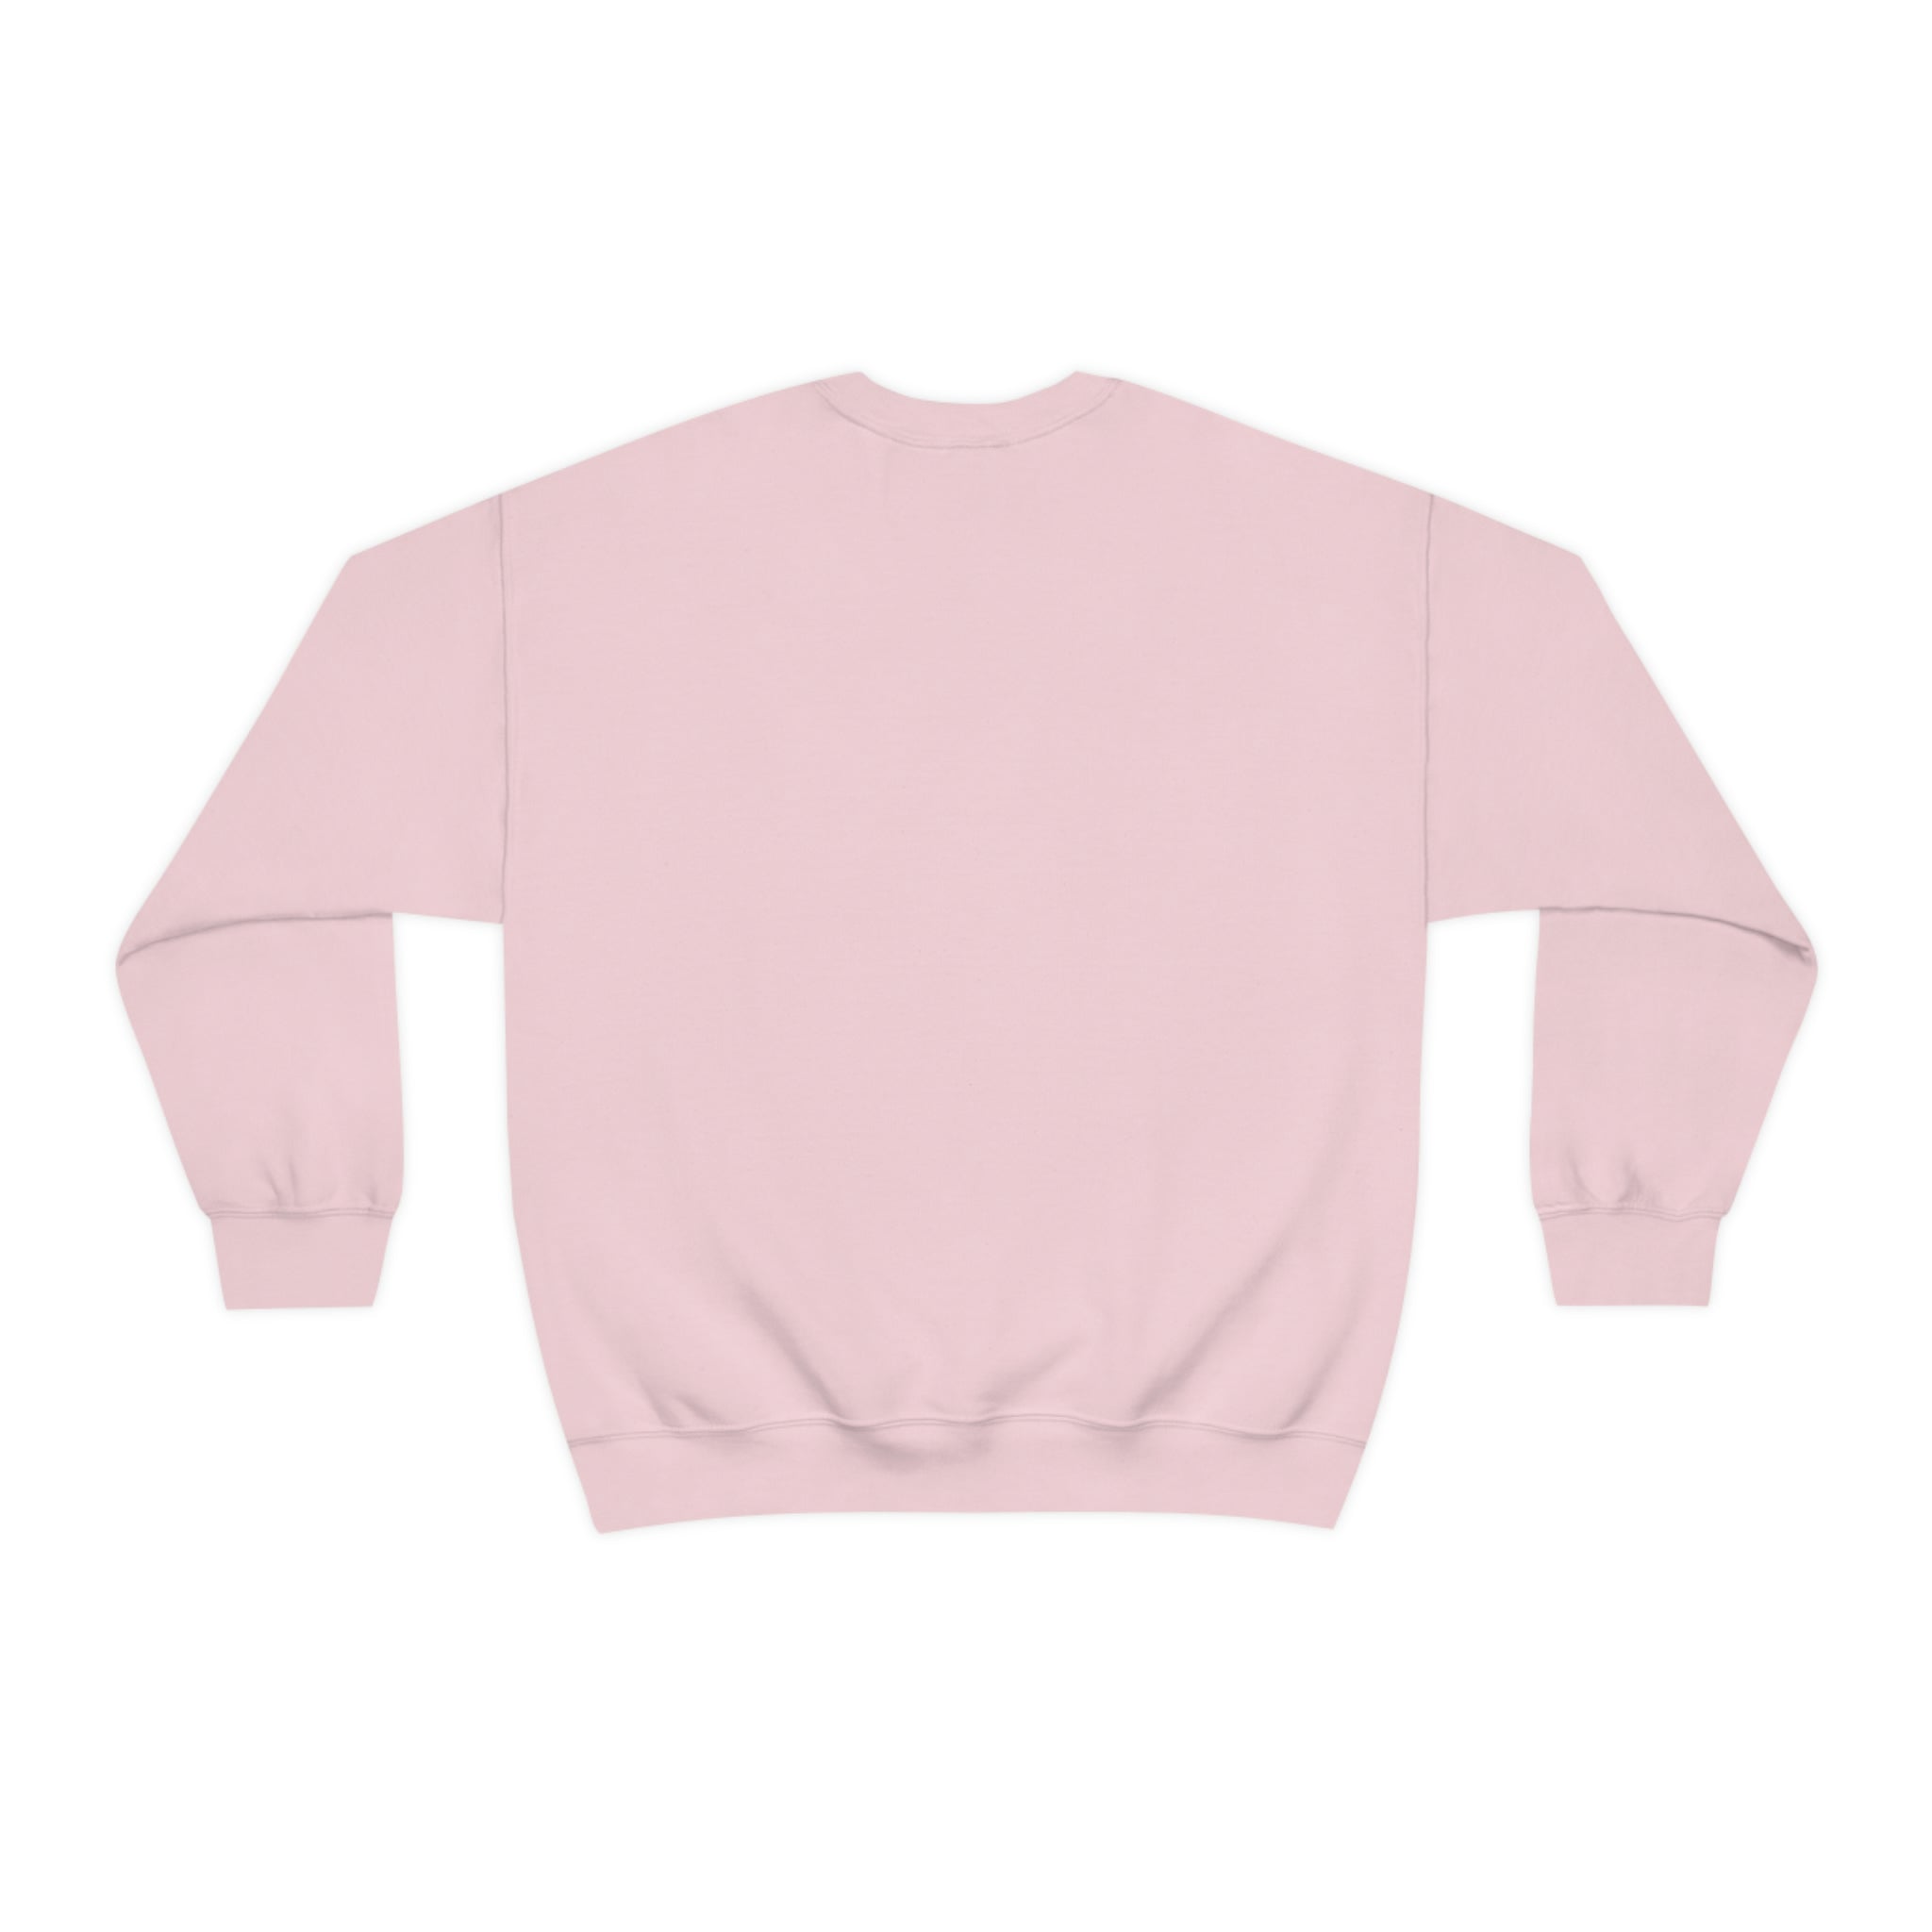 “Claire“ Sweatshirt